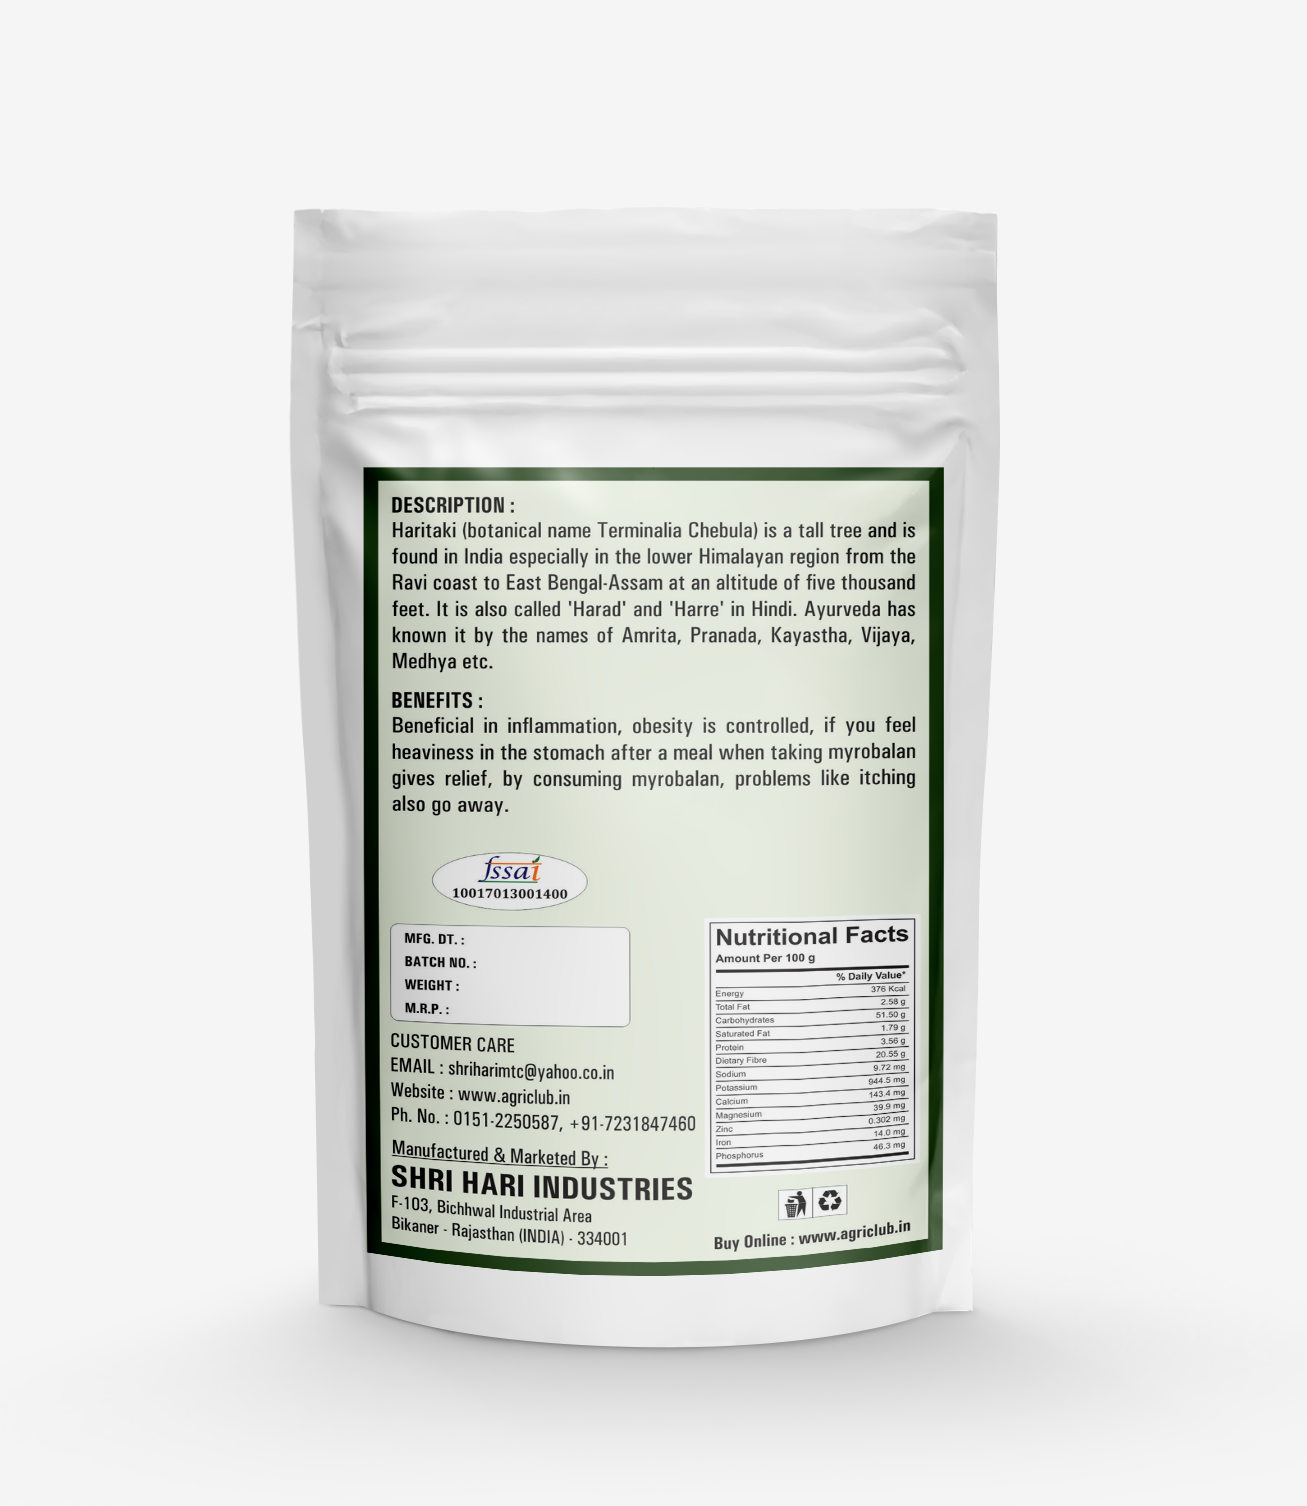 Dry Hard Choti Powder Premium Quality 100 GM